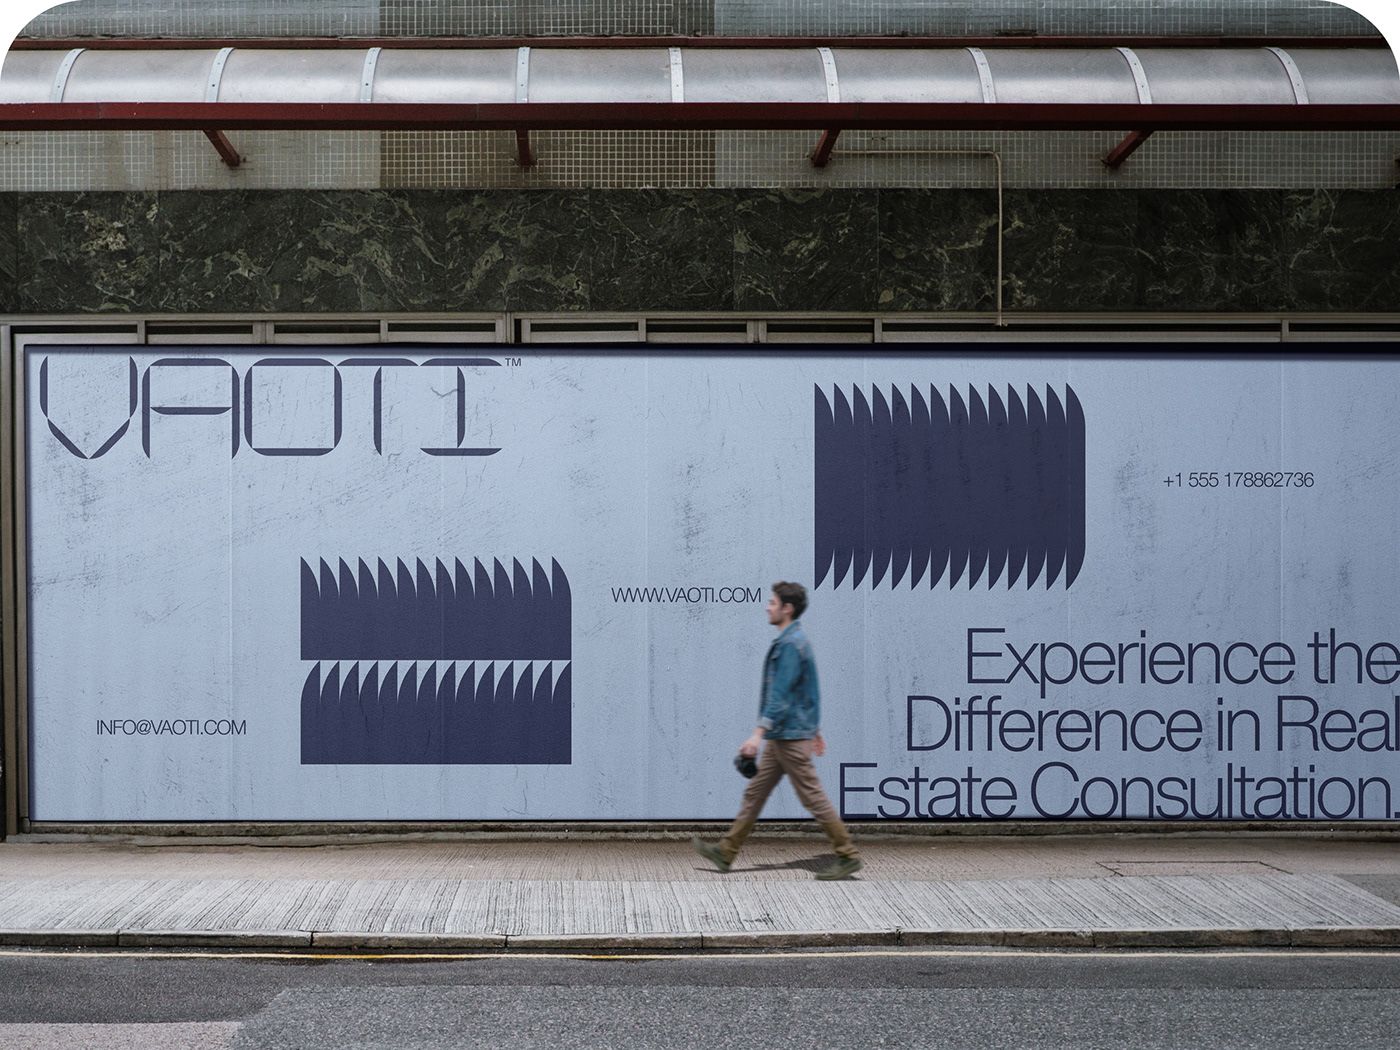 Outdoor urban billboard advertisement design for Vaoti.